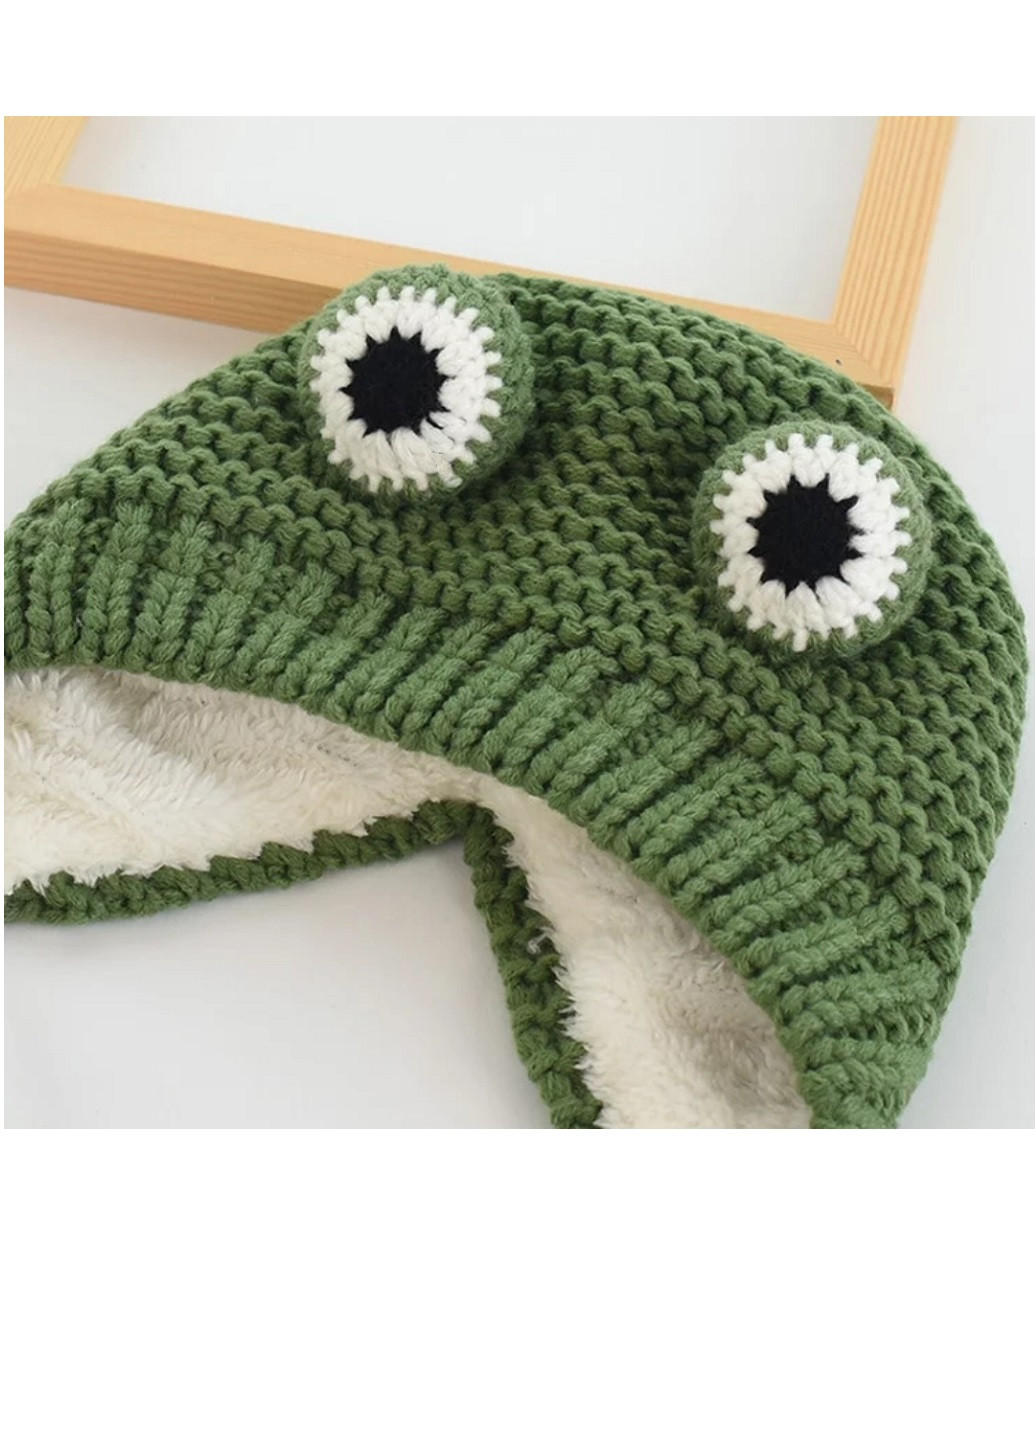 Детская зимняя шапка теплая вязаная Лягушка унисекс NoName шапка (250441800)